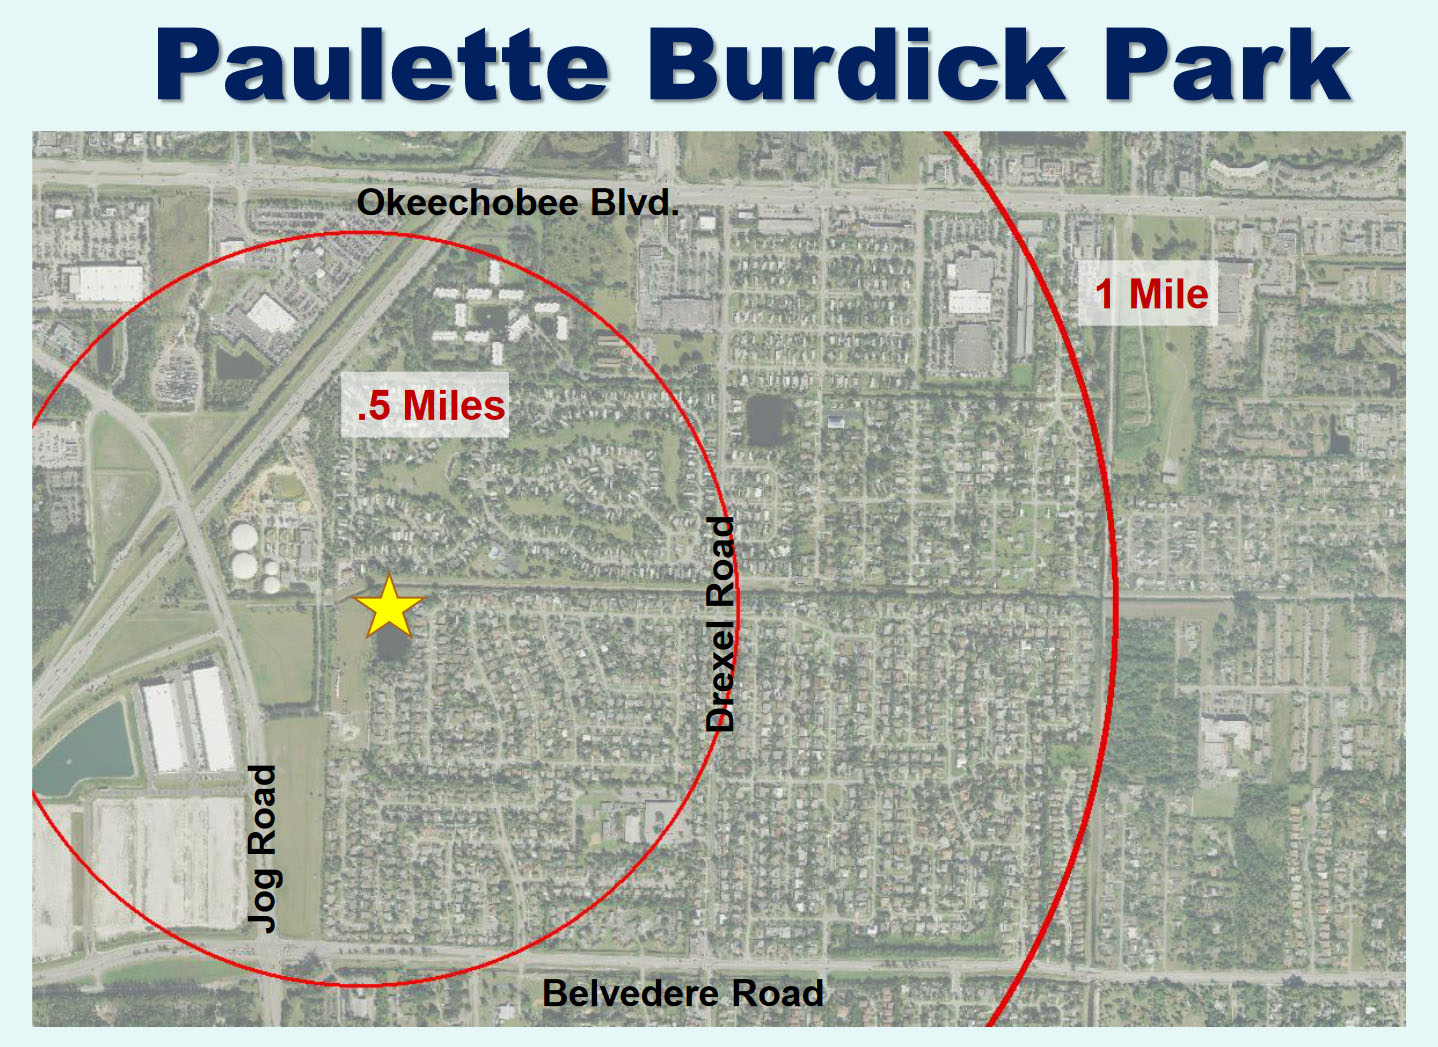 Park location on map near jog and okeechobee